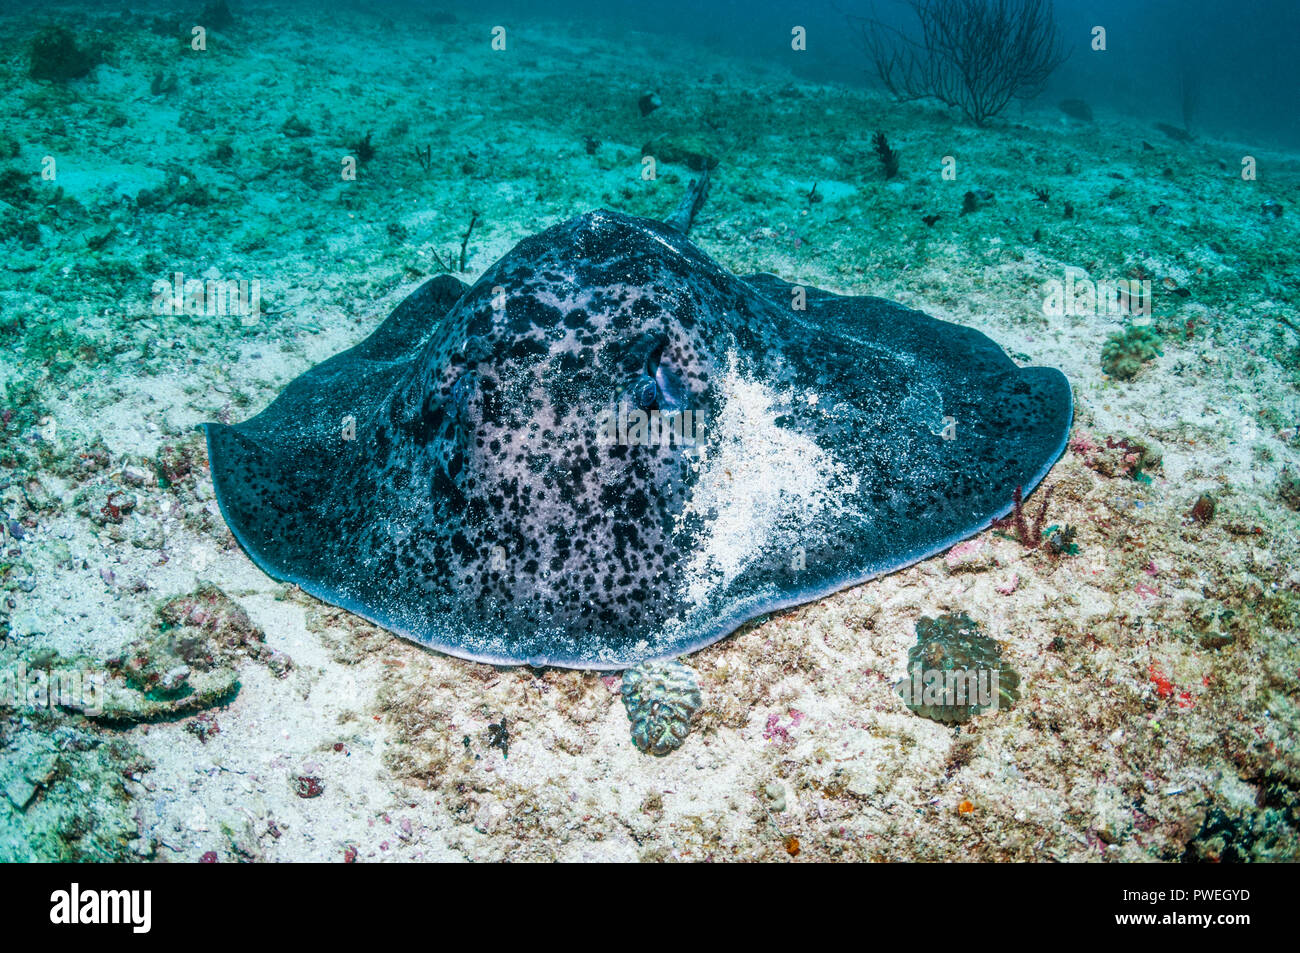 Round ribbontail or Blotched fantail ray [Taeniura meyeni].  West Papua, Indonesia. Stock Photo